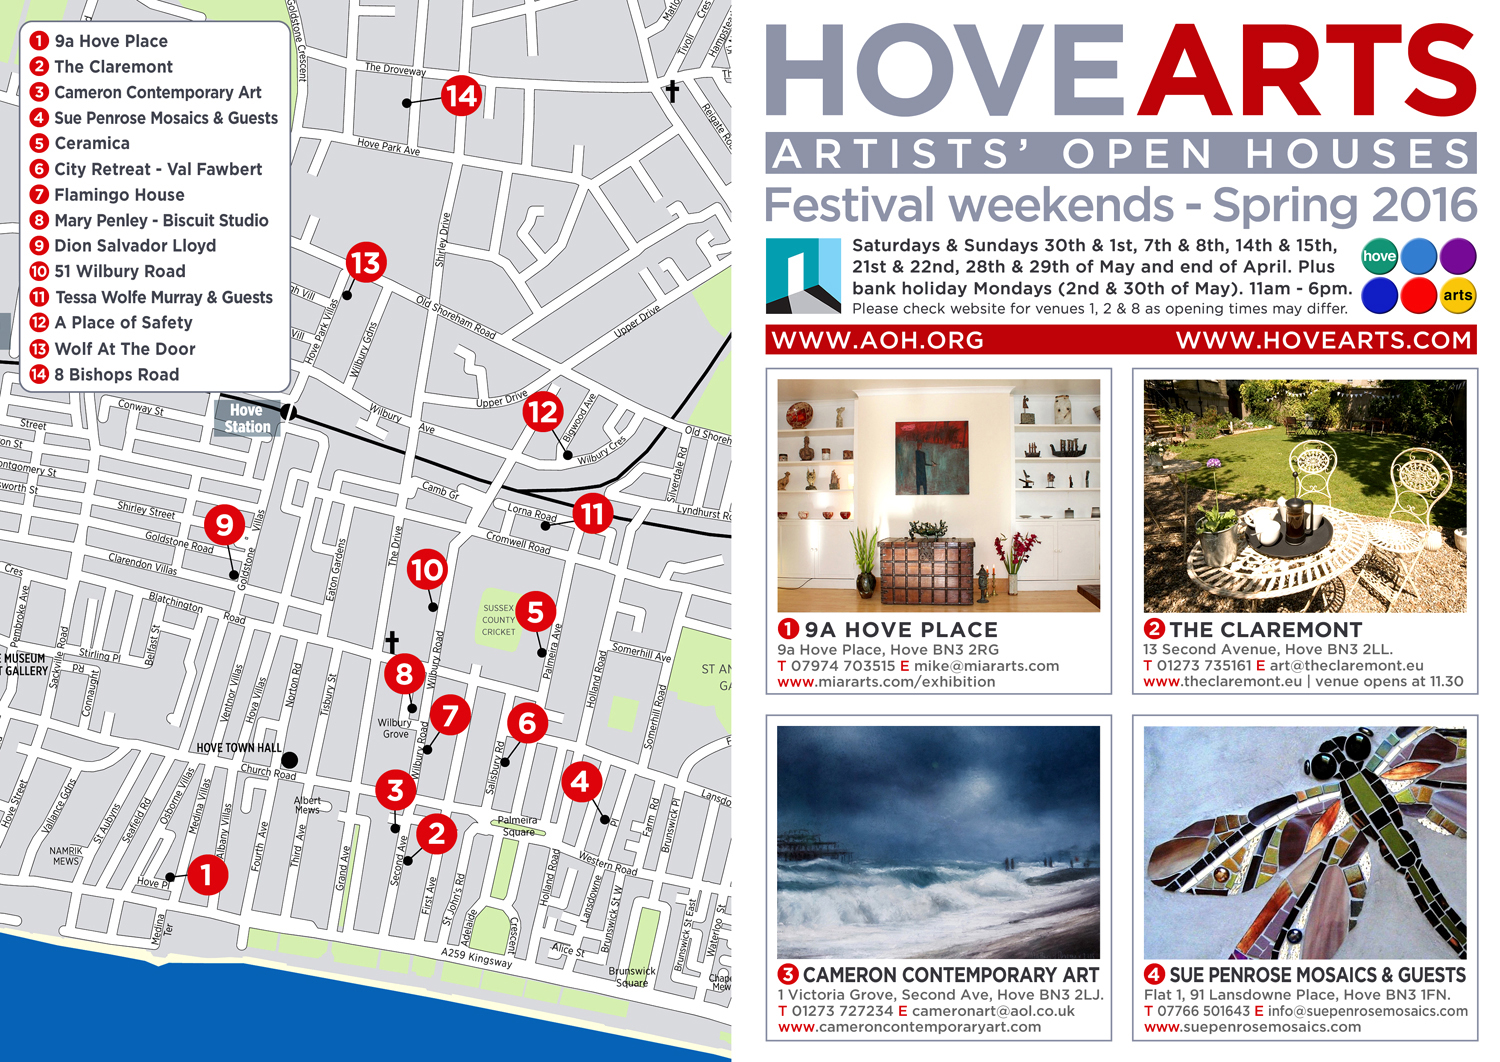 Hove Arts leaflet 2016 - outside - designed by Hook Web & Print